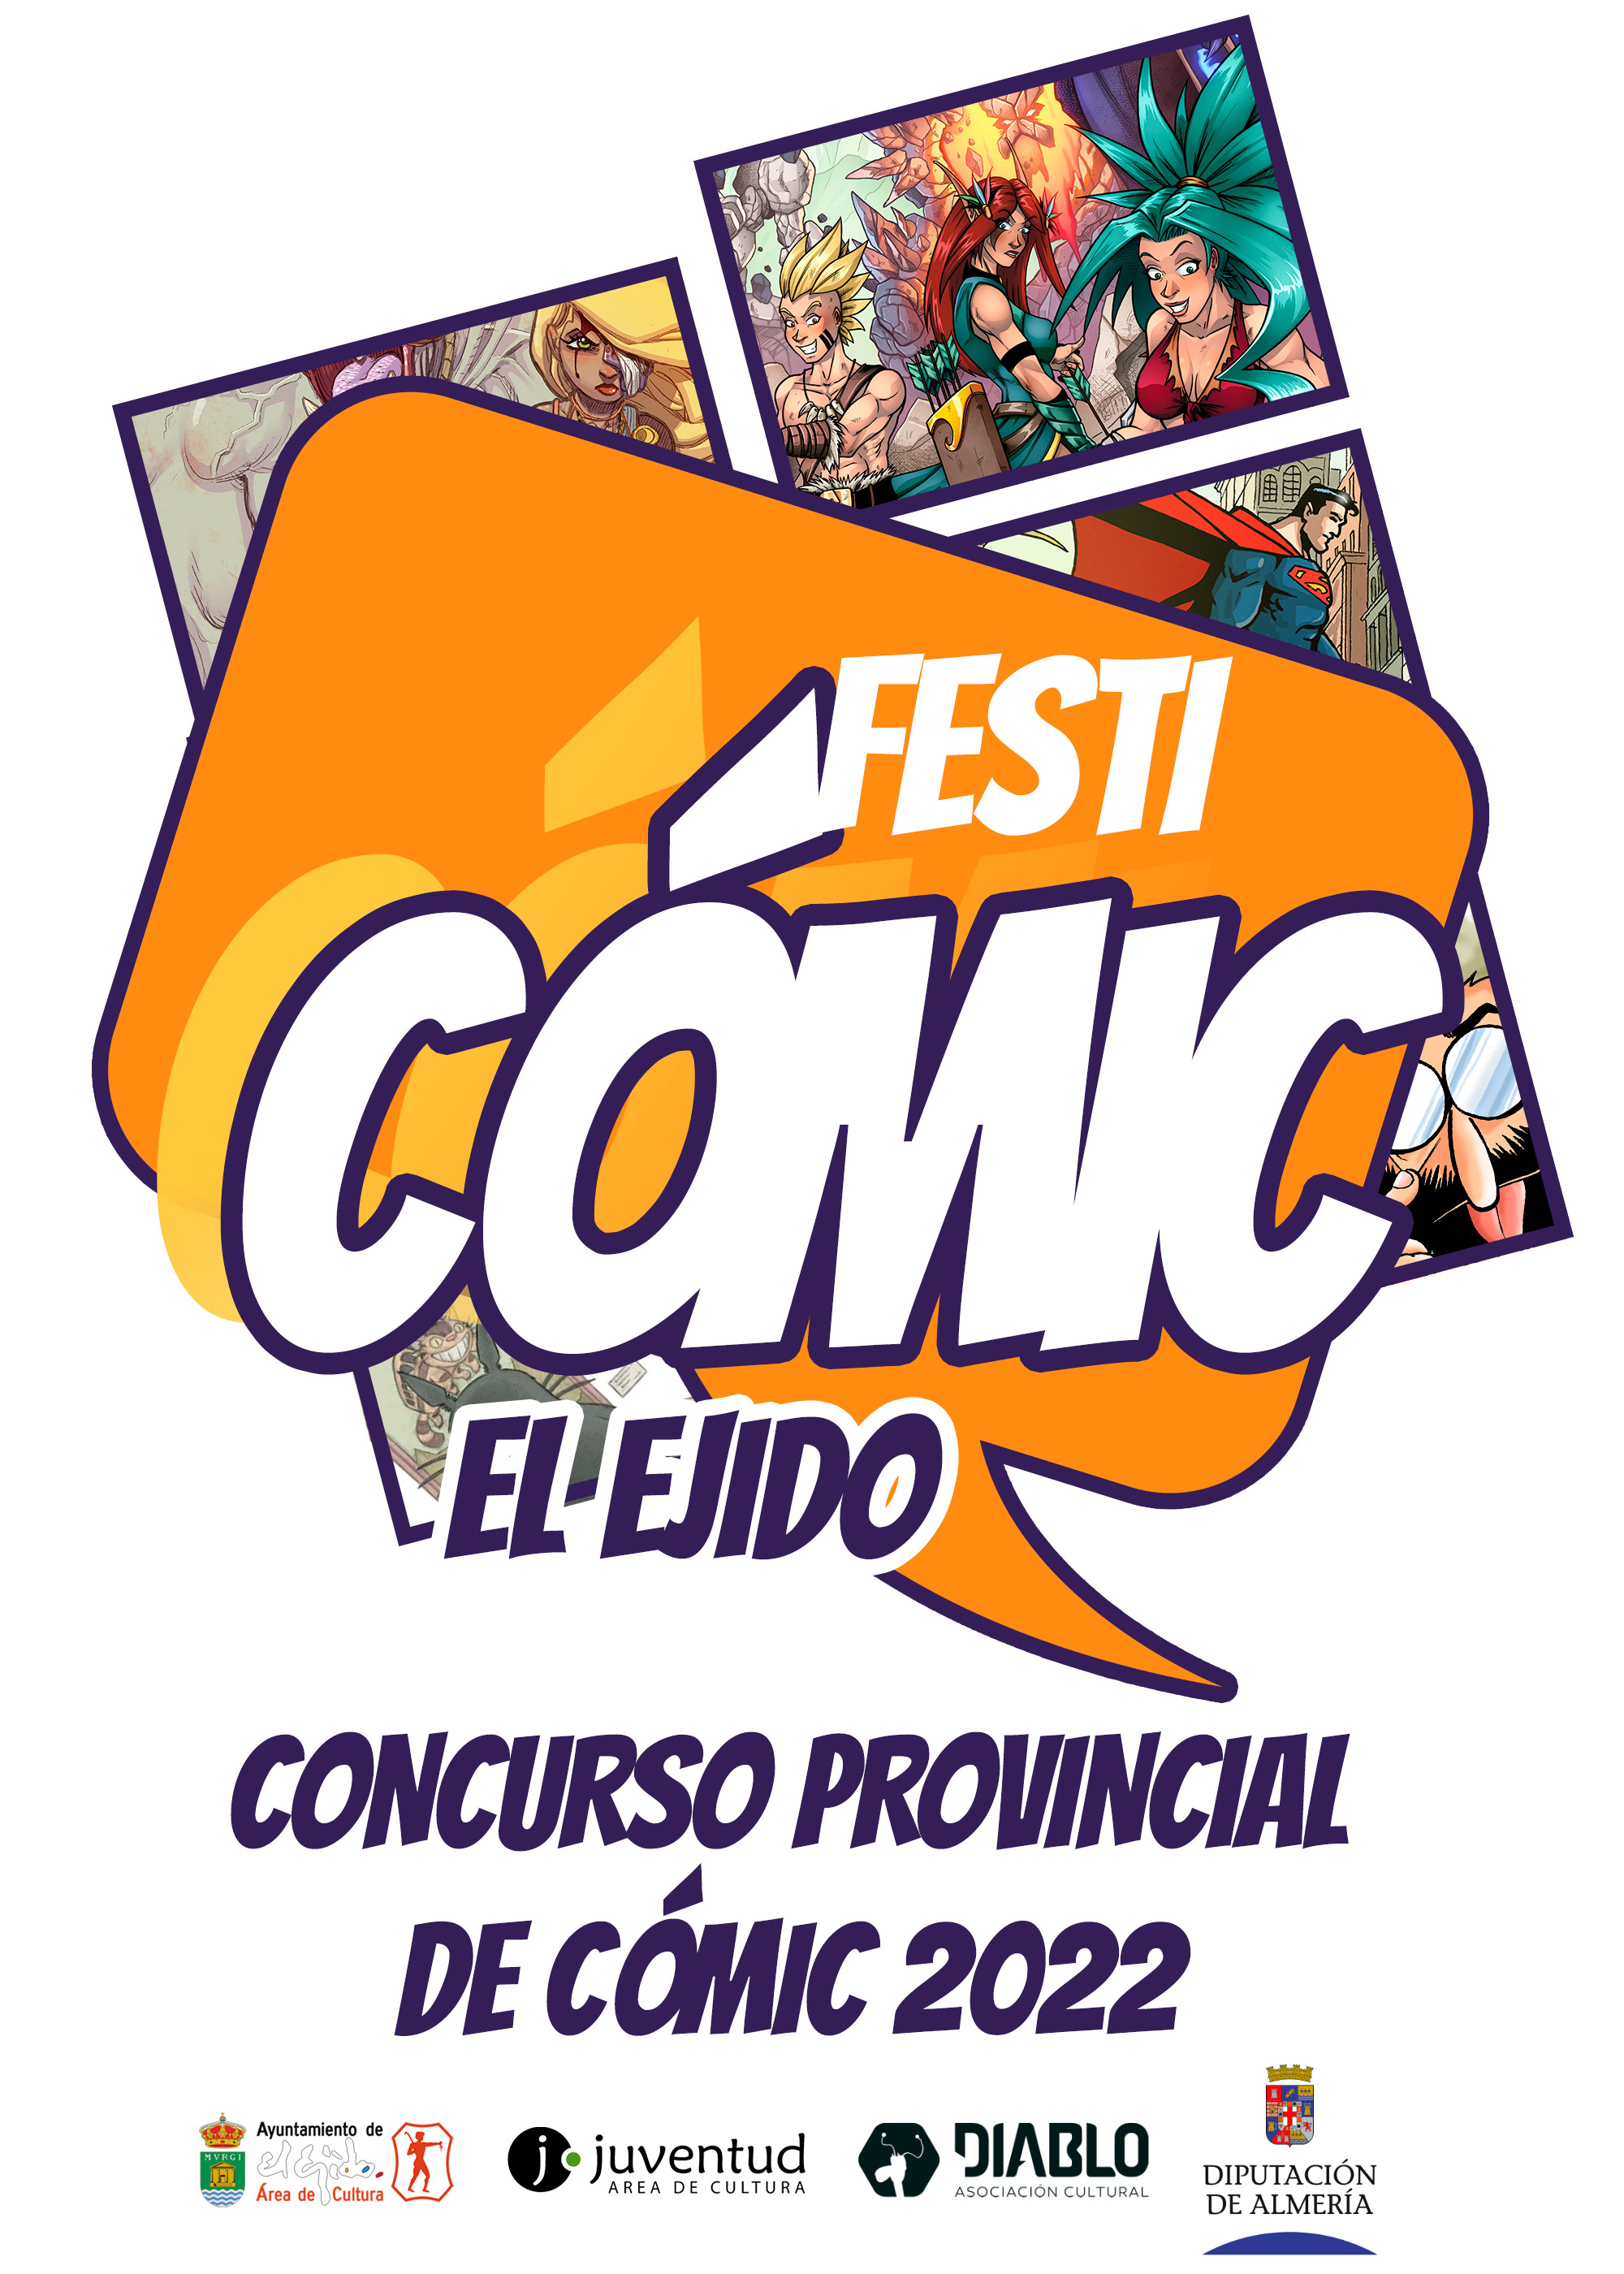 Concurso provincial de cómic - Festicómic 2022